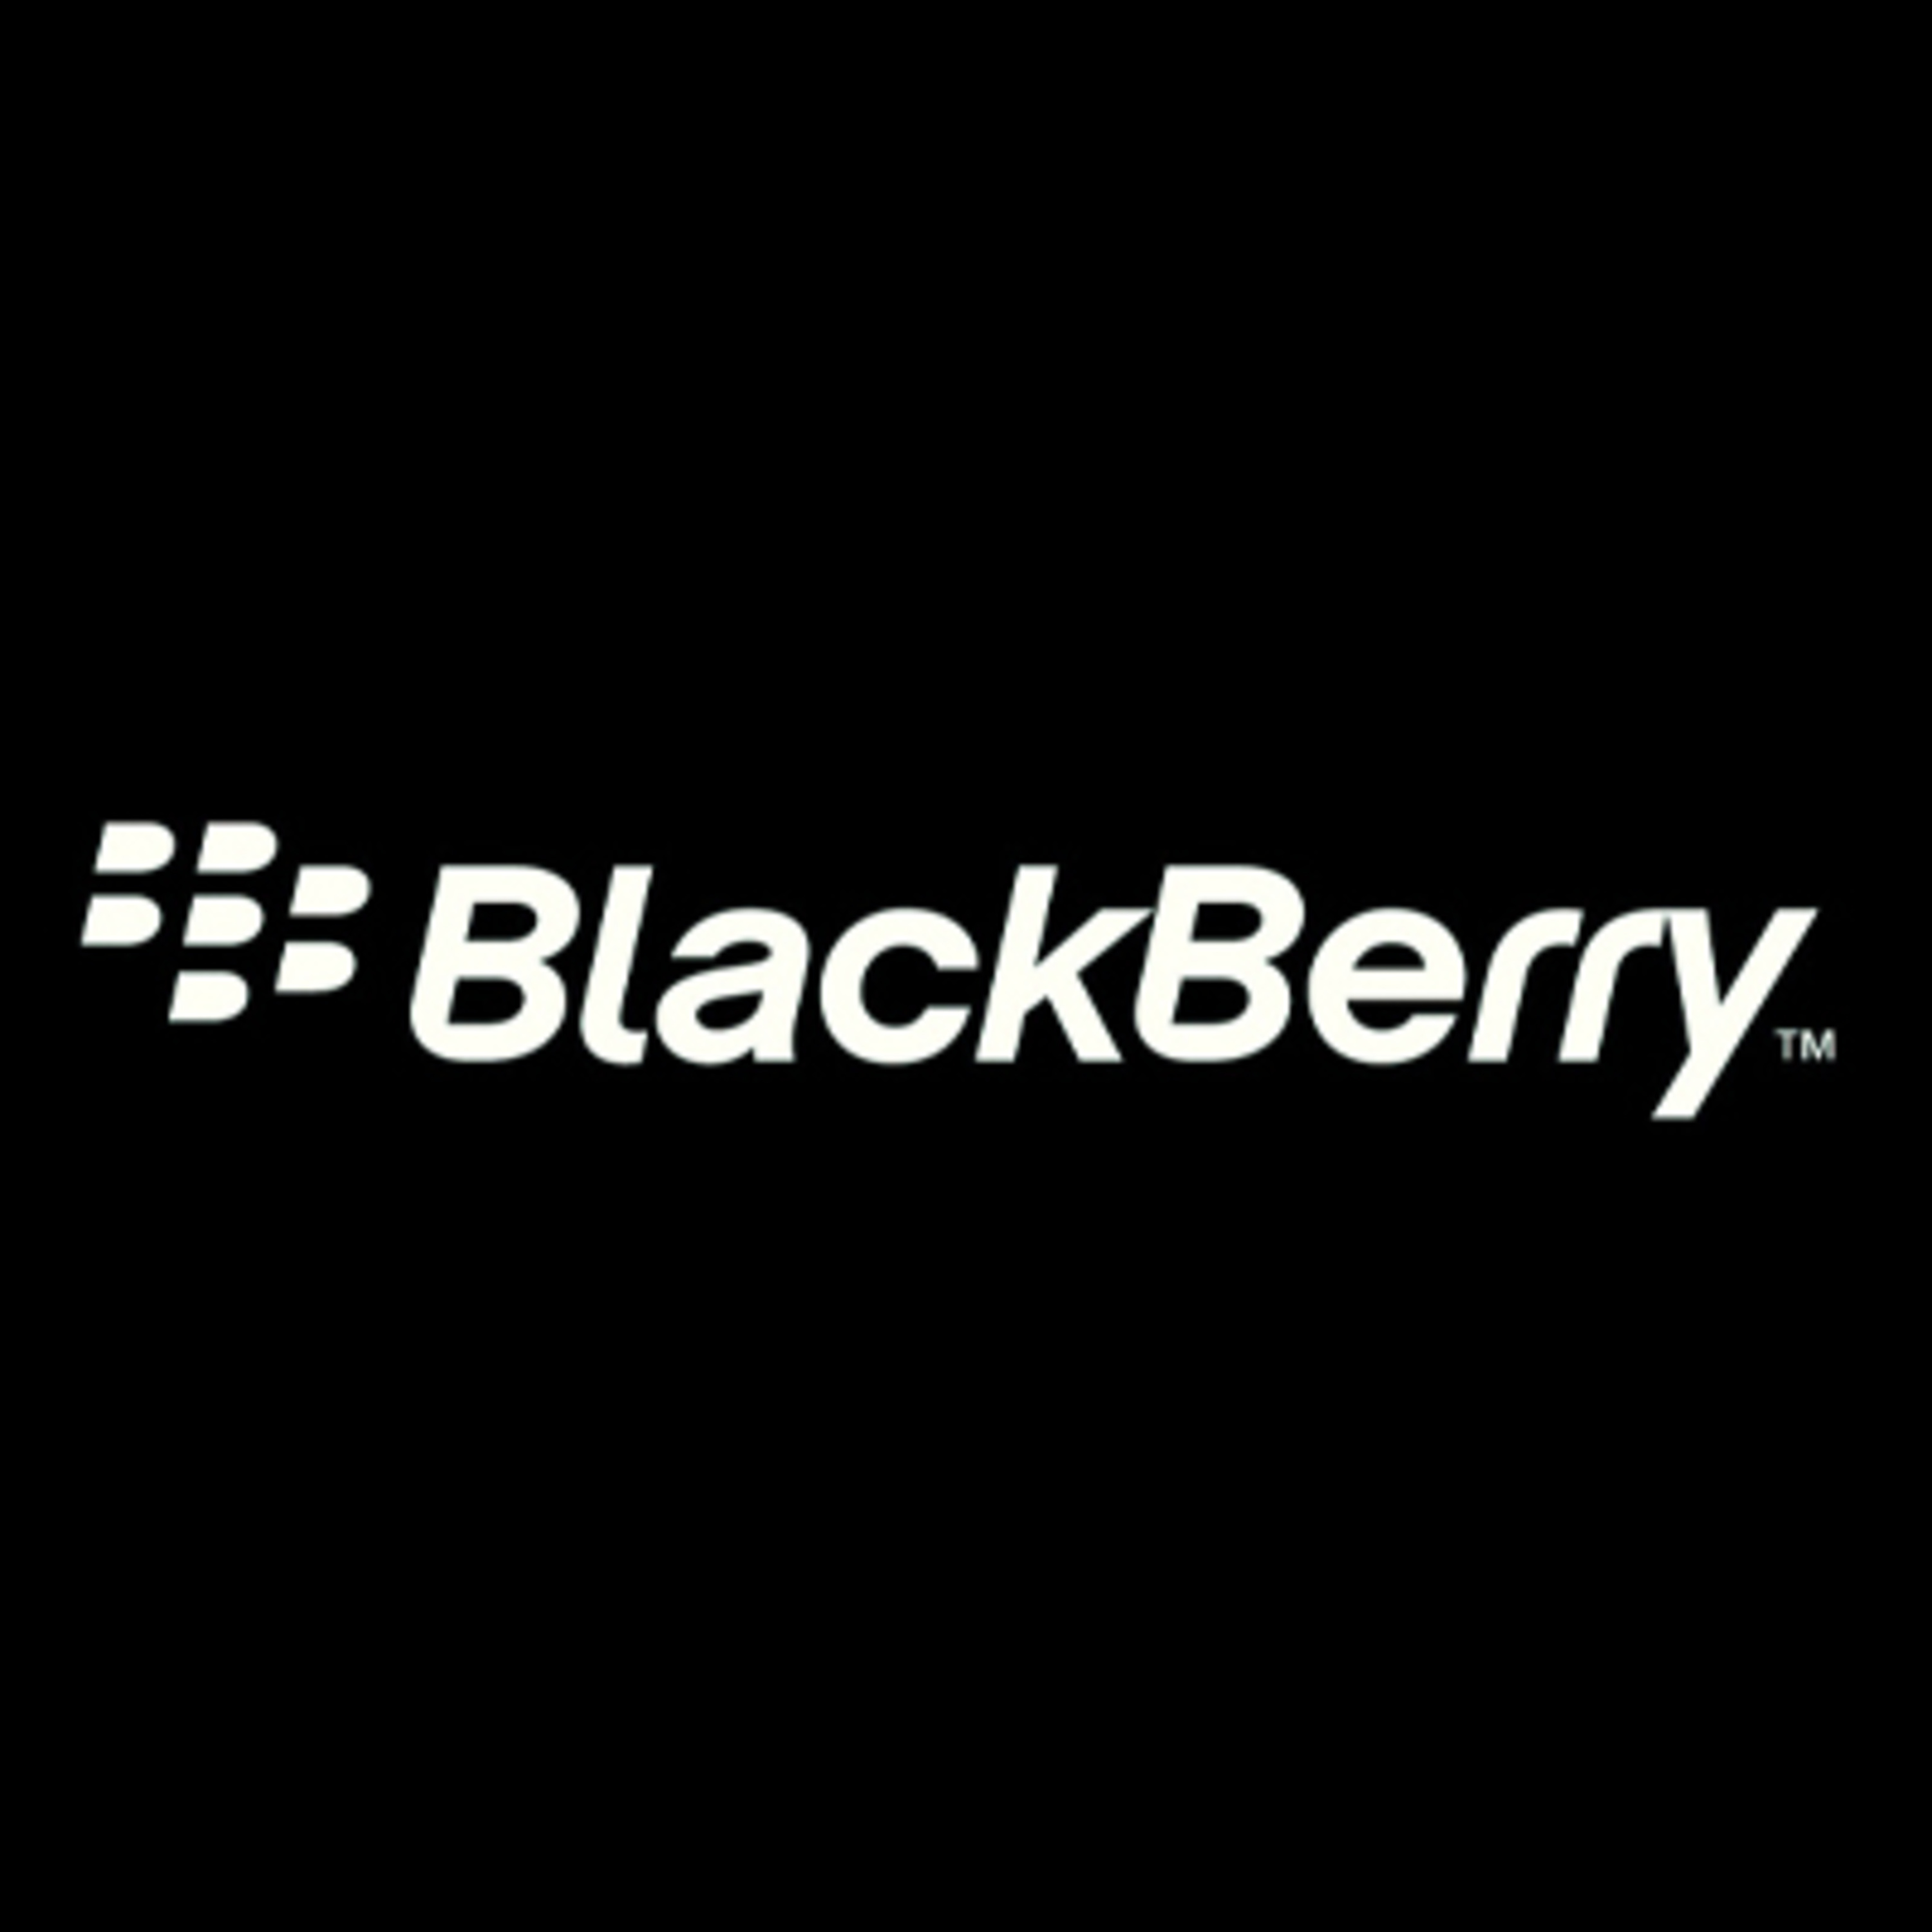 Bye-bye BB! - BlackBerry búcsúztató